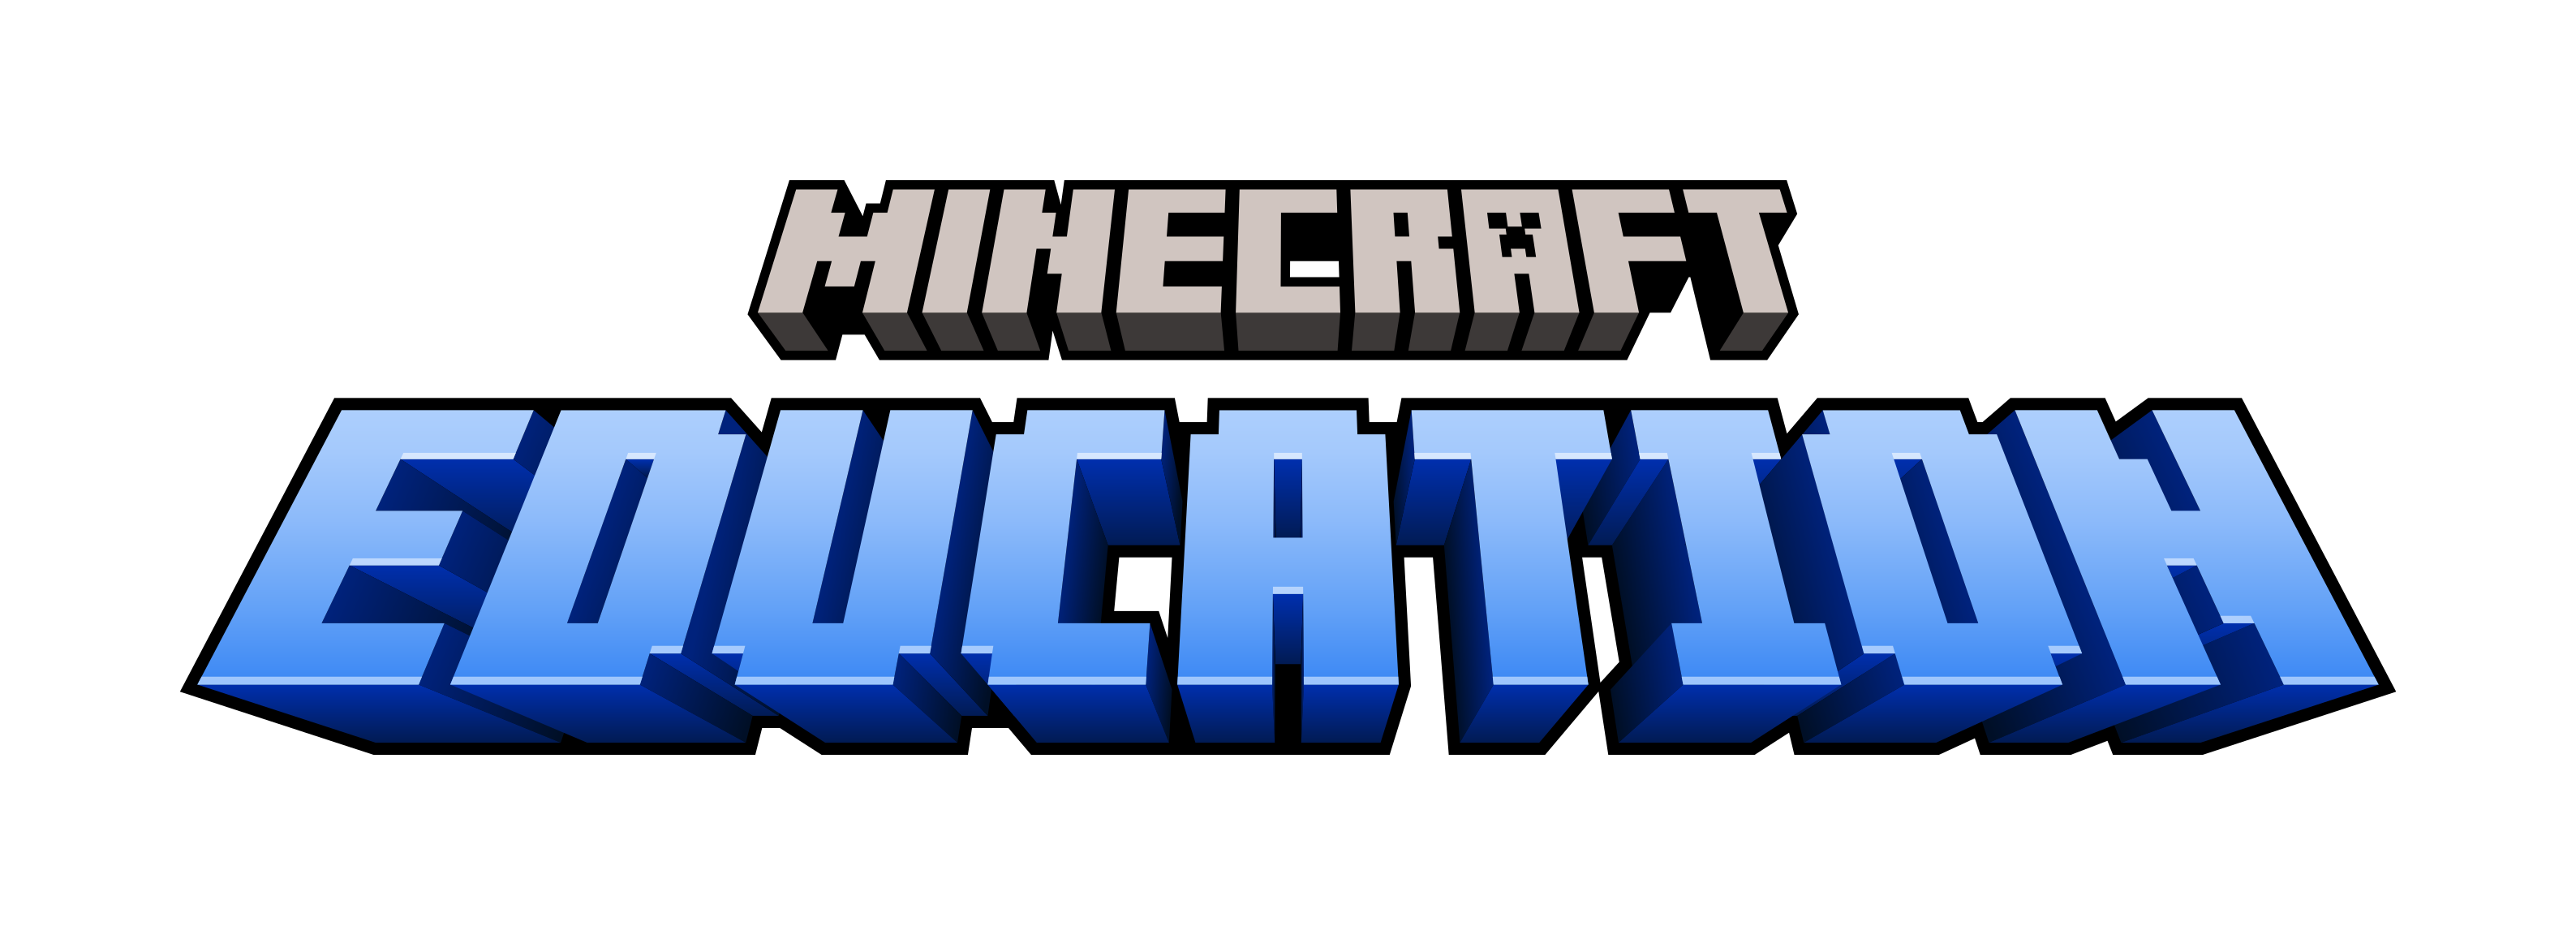 Minecraft Education logo